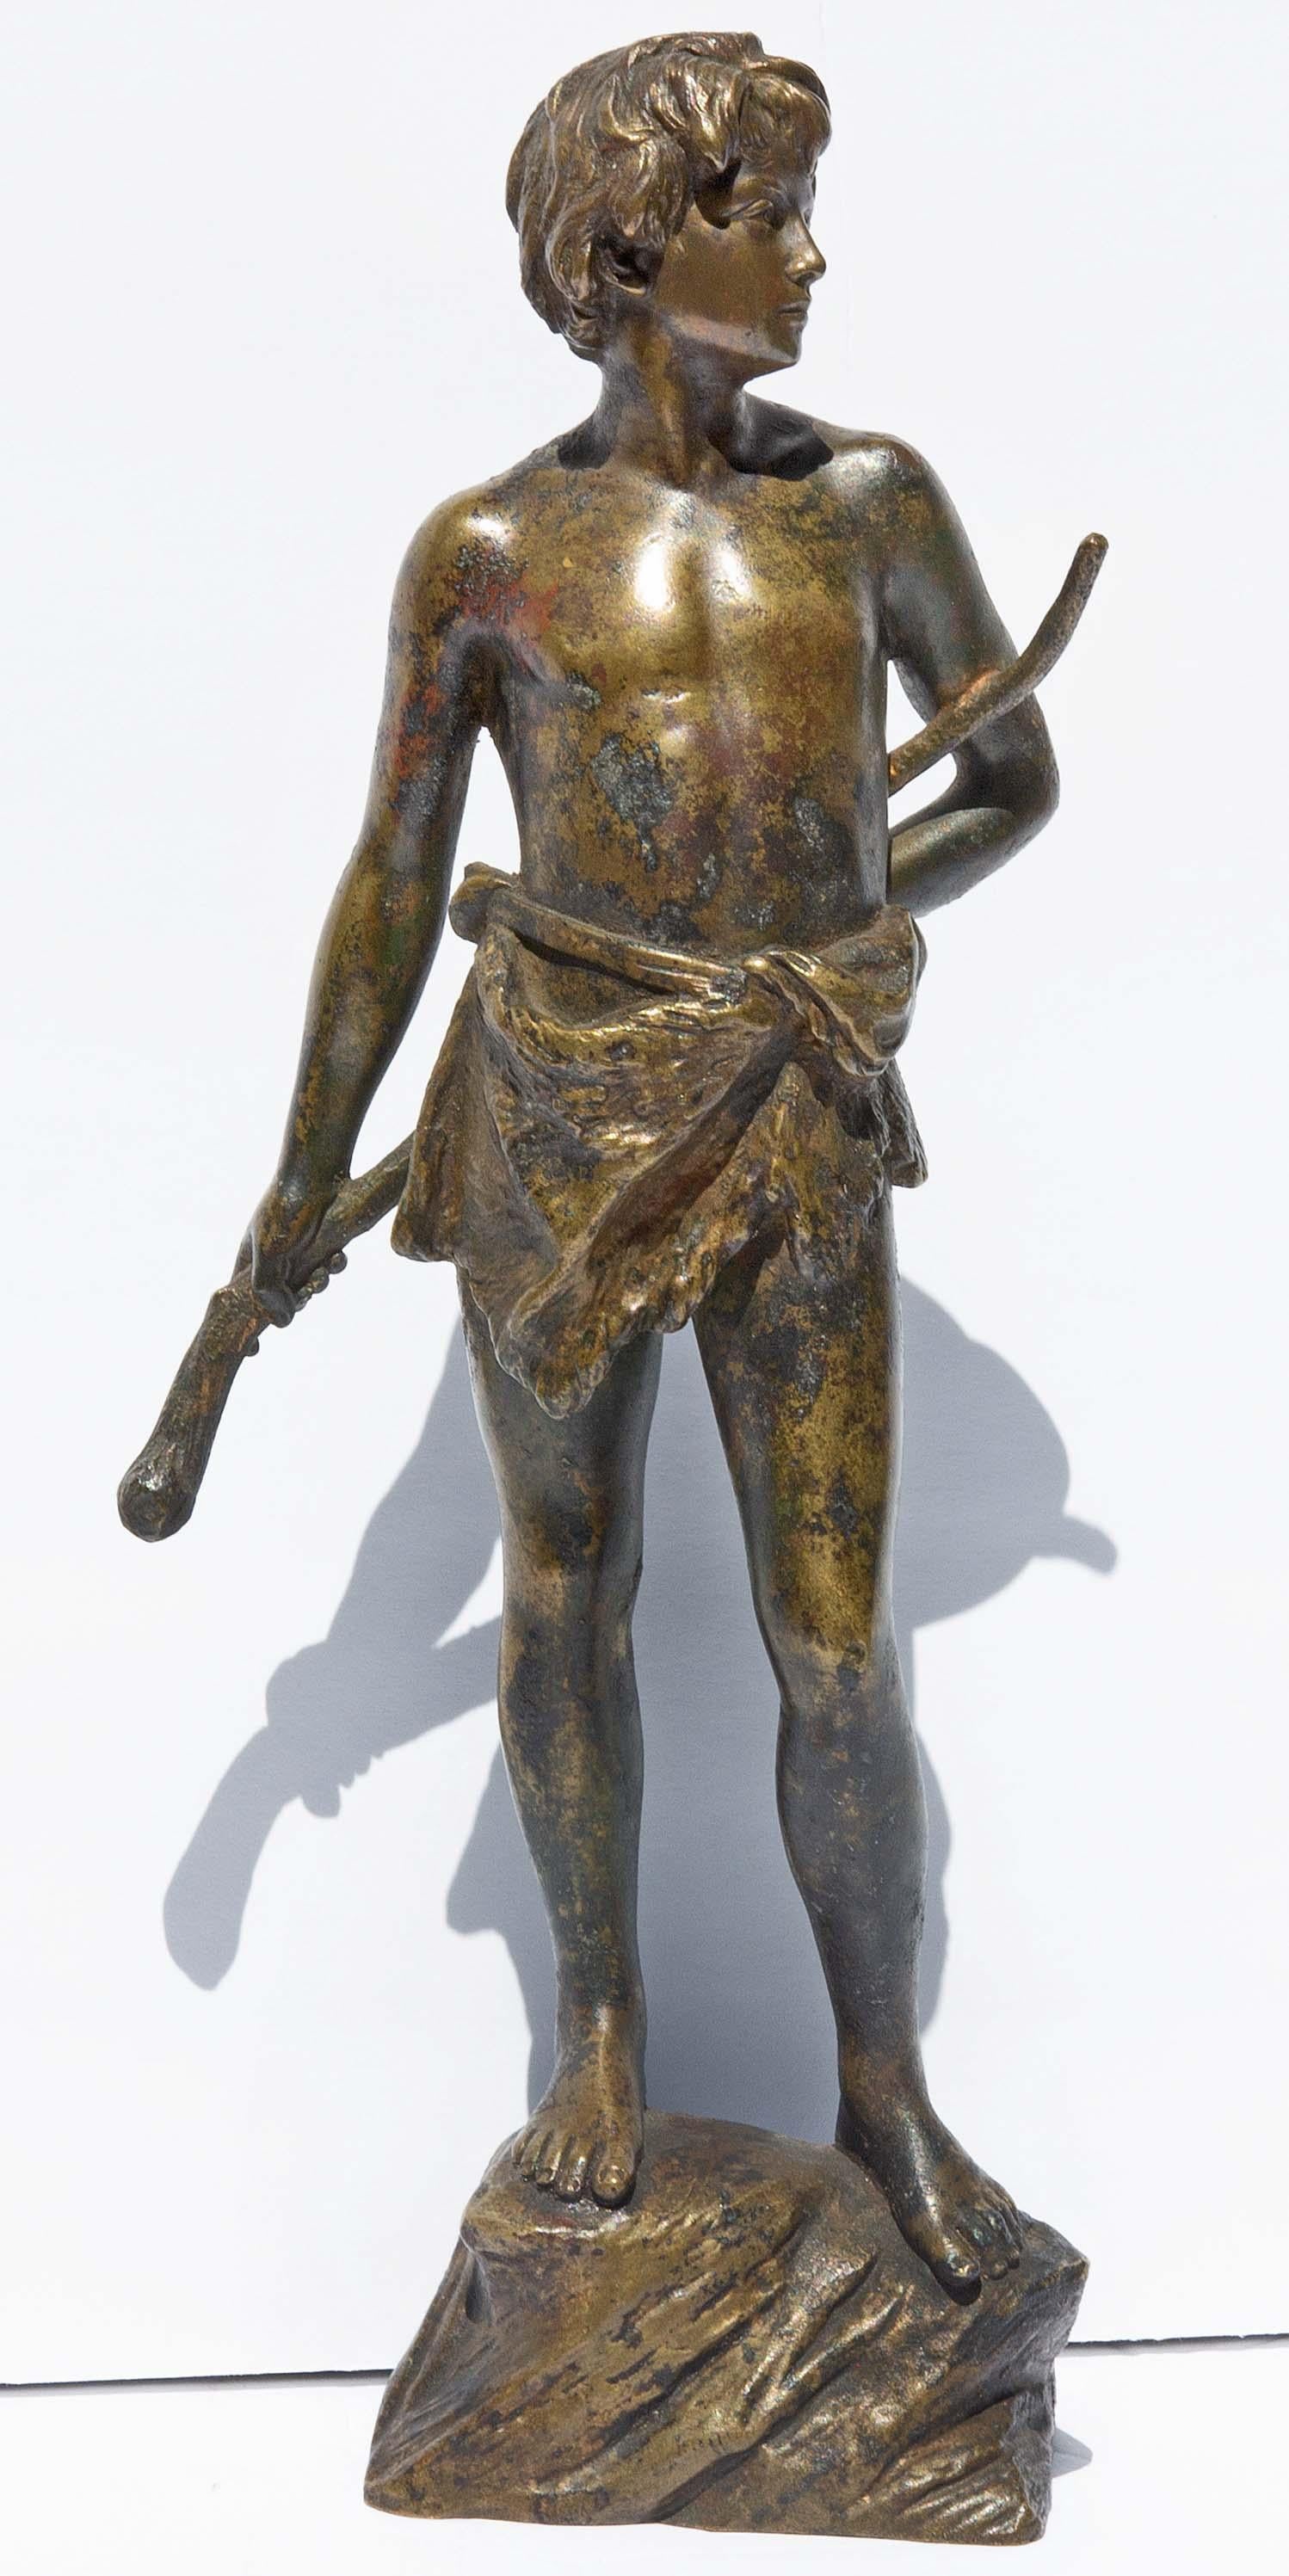 Unknown Figurative Sculpture - Young Goatherder Bronze Sculpture by Oscar Gladenbeck, circa 1900